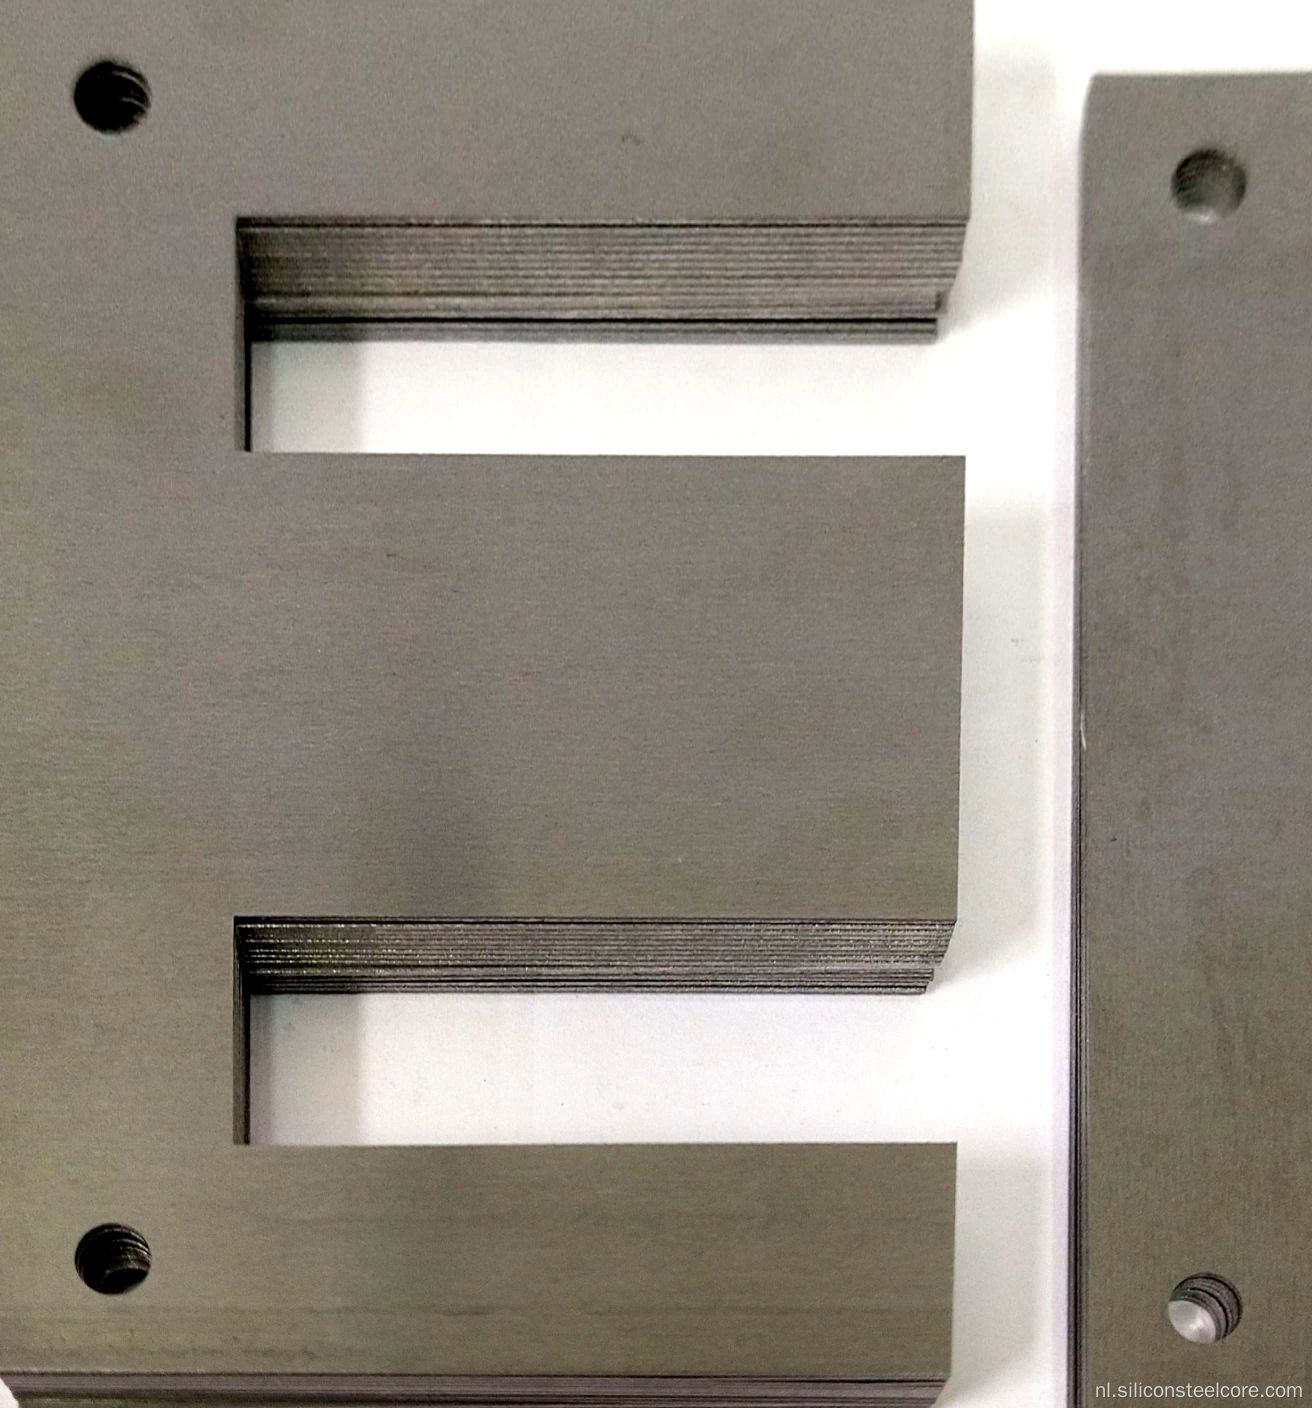 Koud opgerolde EI Laminatie Silicium Steel Transformator Core